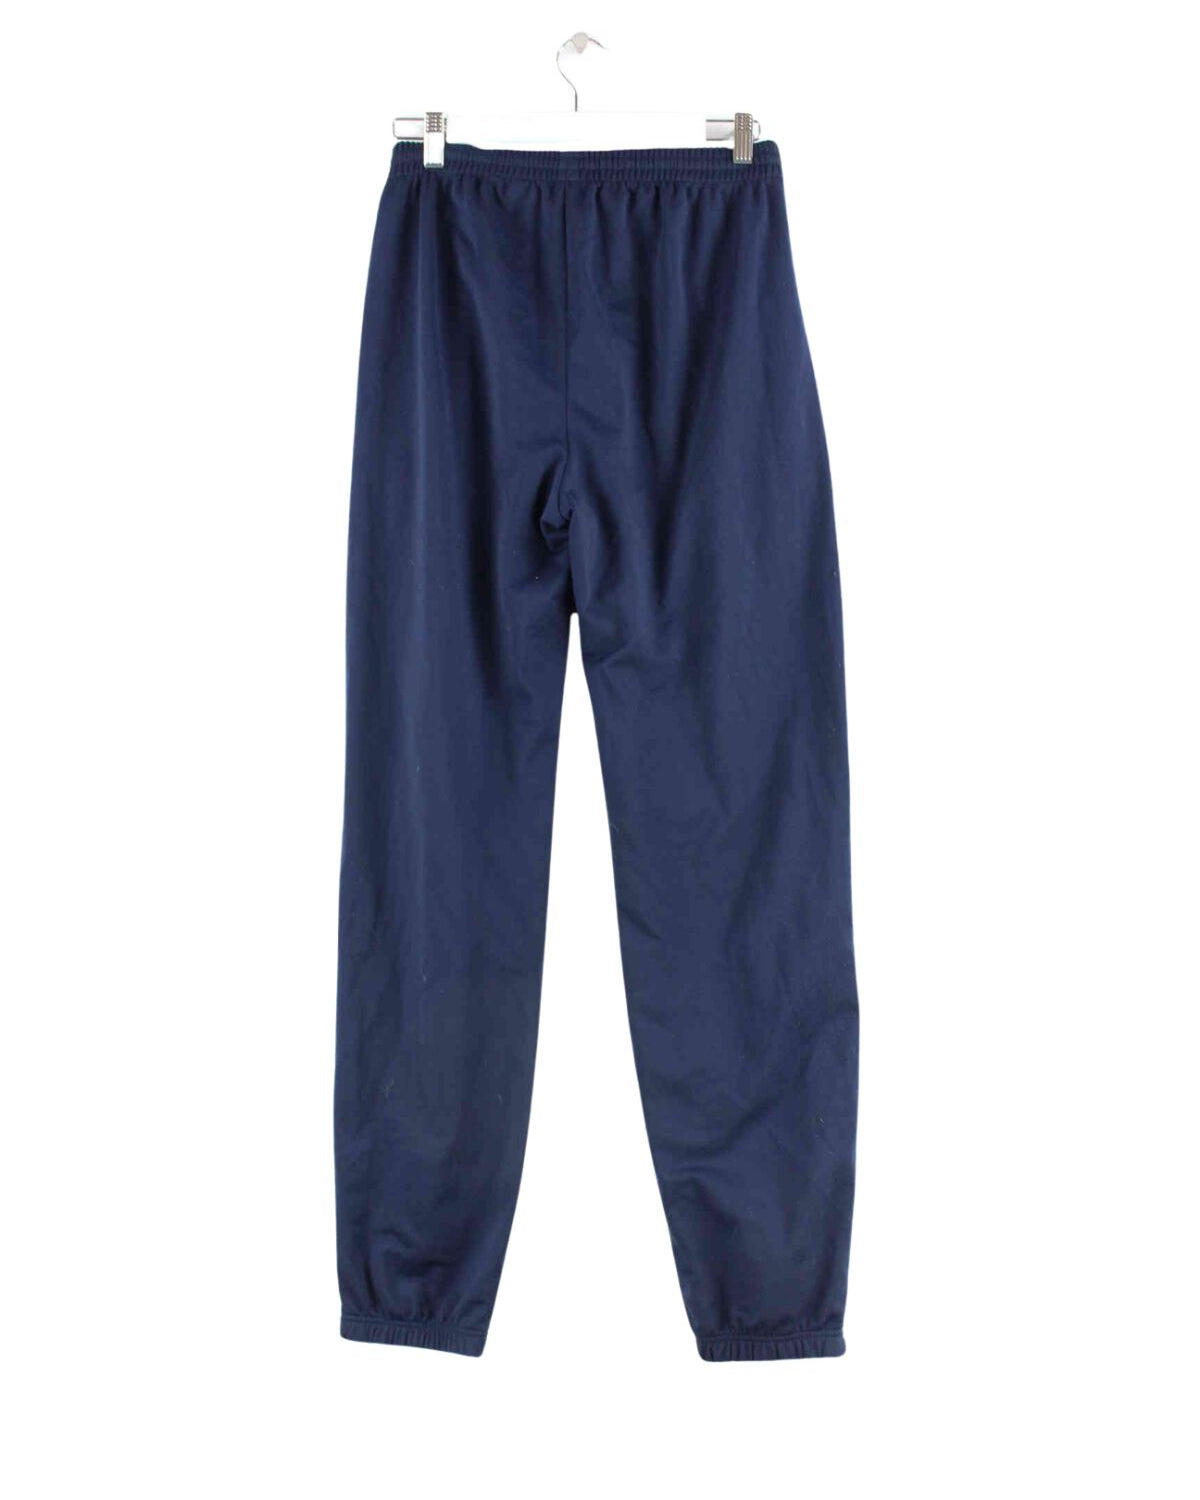 Nike Damen Track Pants Blau M (back image)